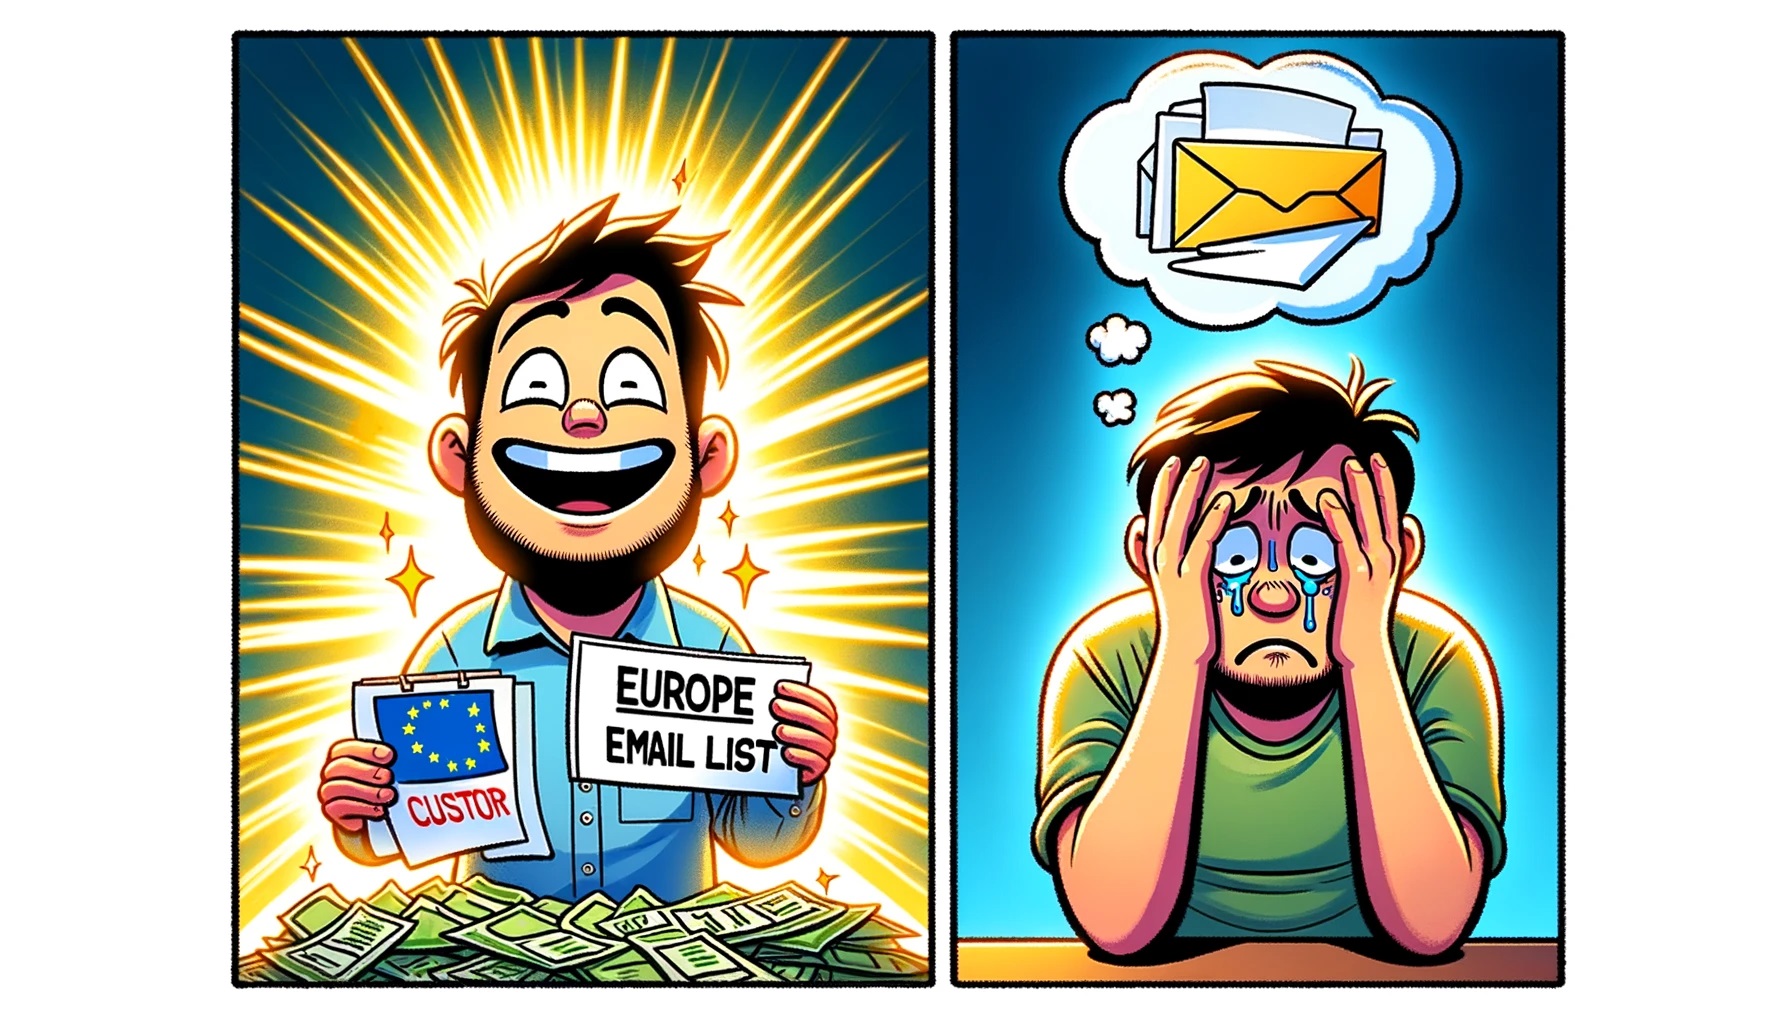 Europe mailing lists